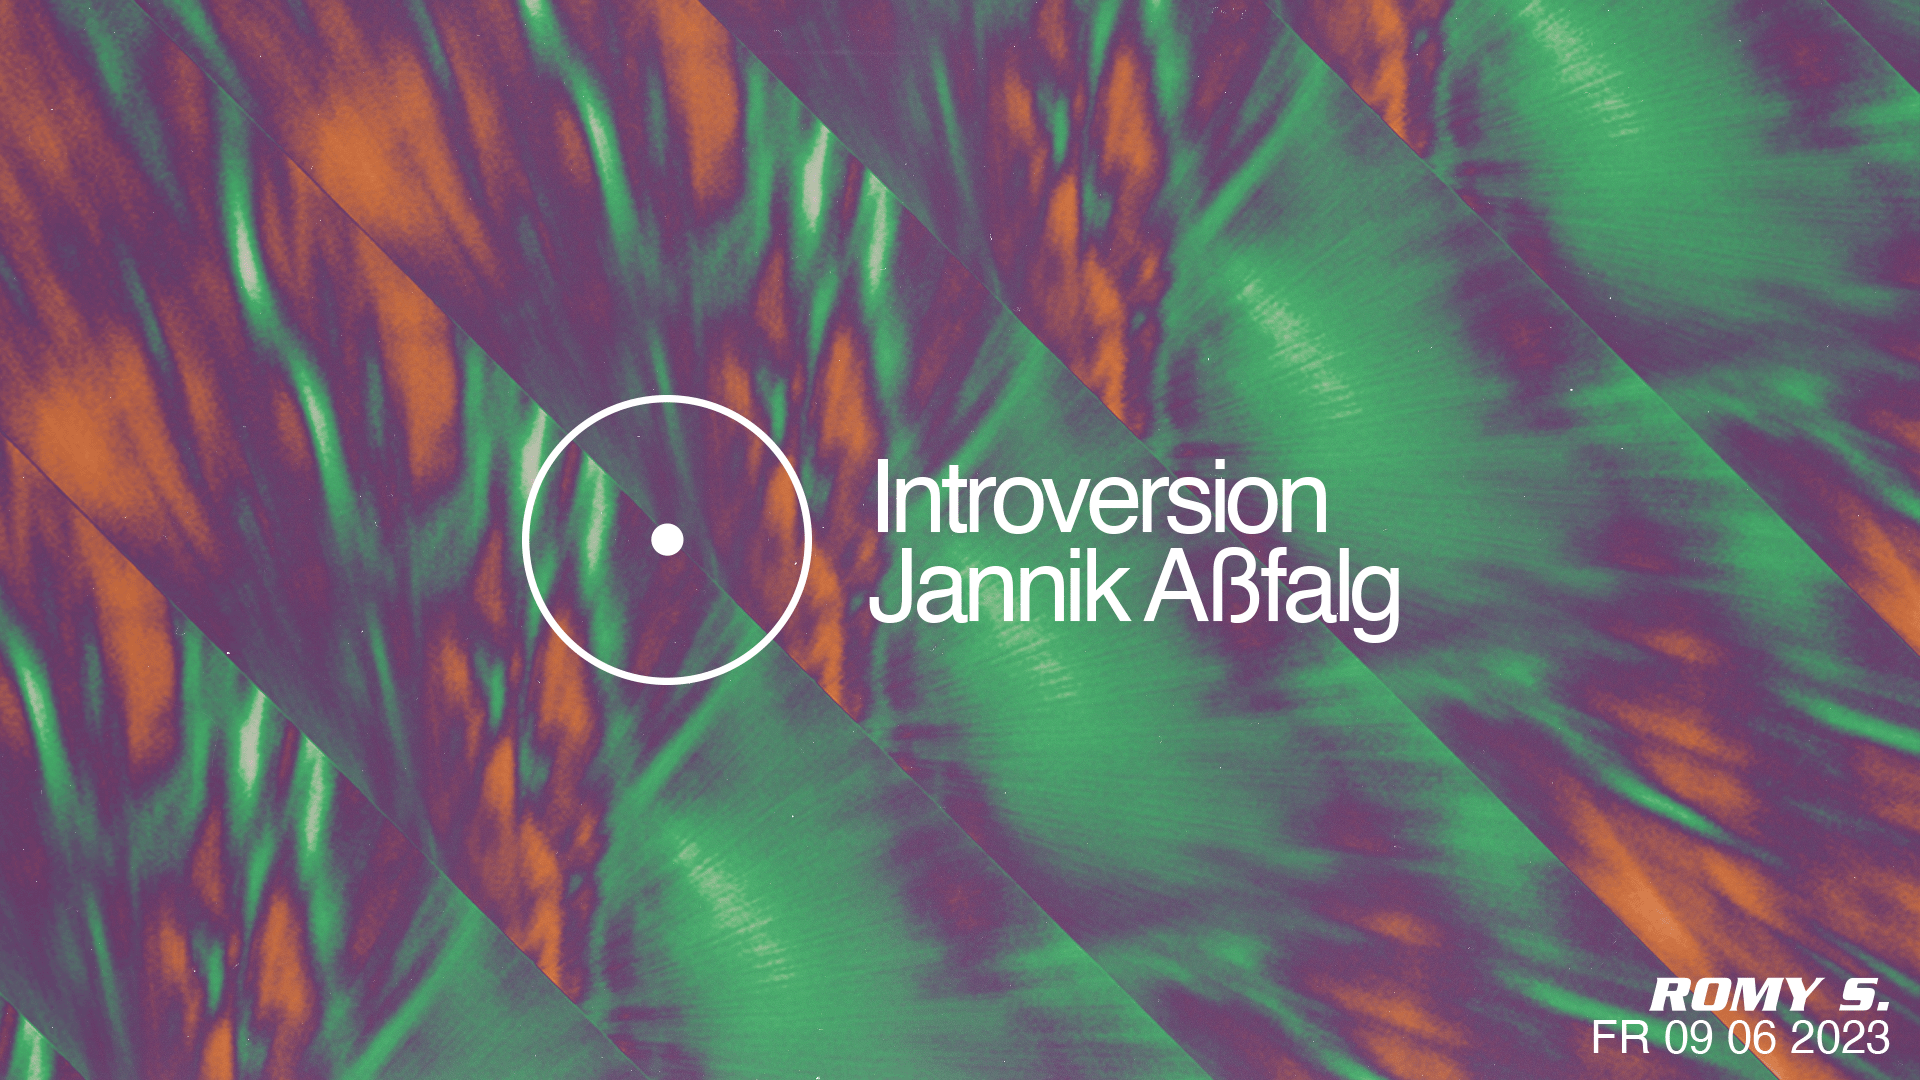 Romy S. with Introversion, Jannik Aßfalg - フライヤー表